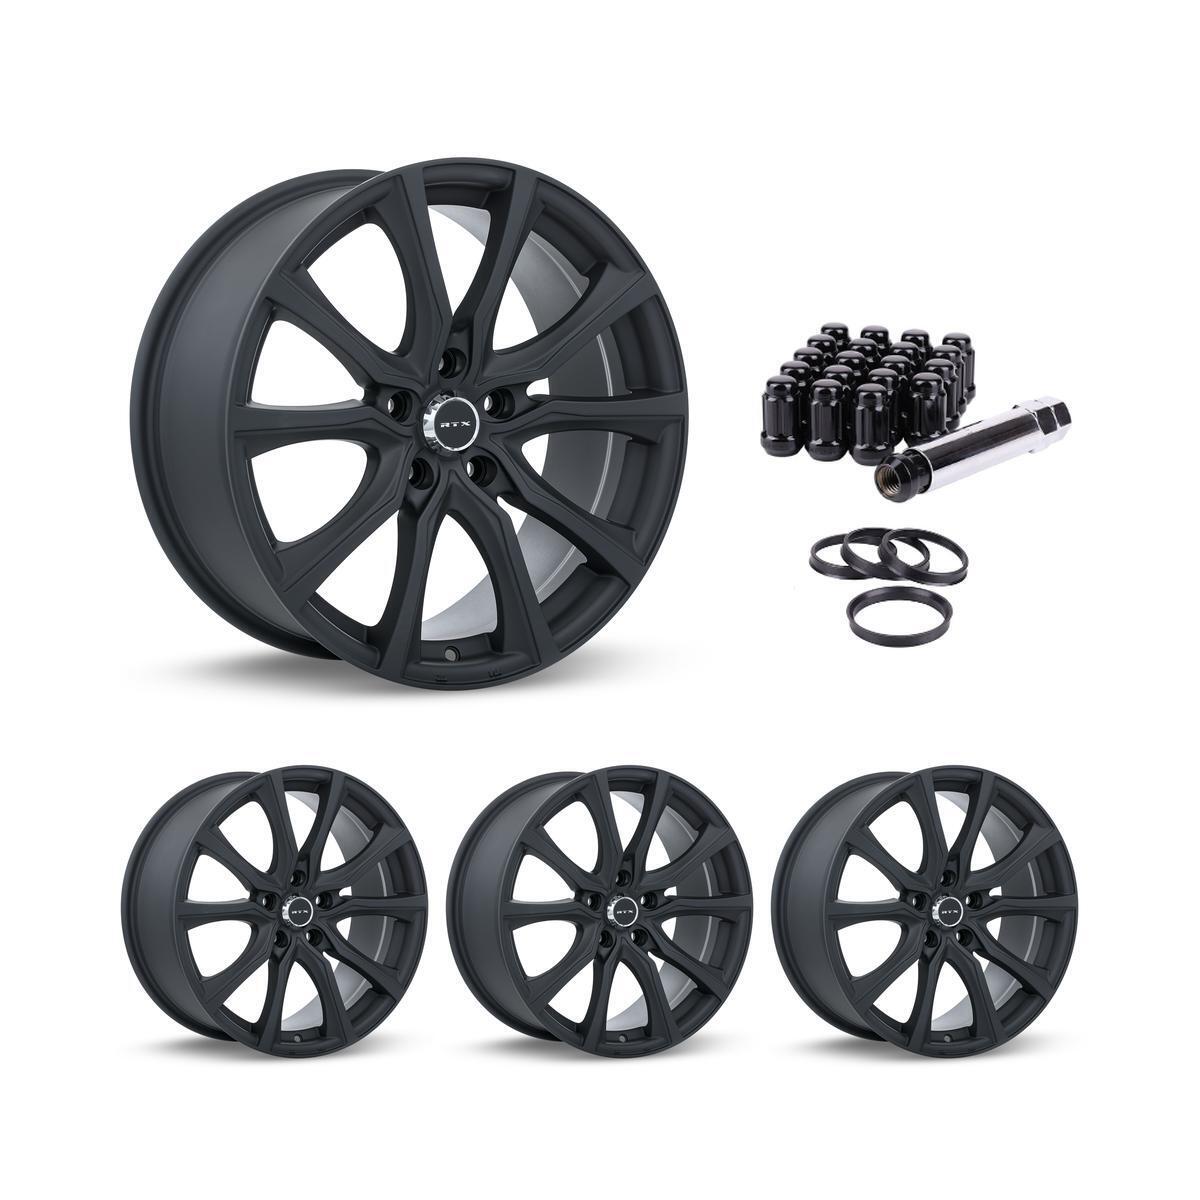 Wheel Rims Set with Black Lug Nuts Kit for 01-06 BMW 325Ci P826588 17 inch